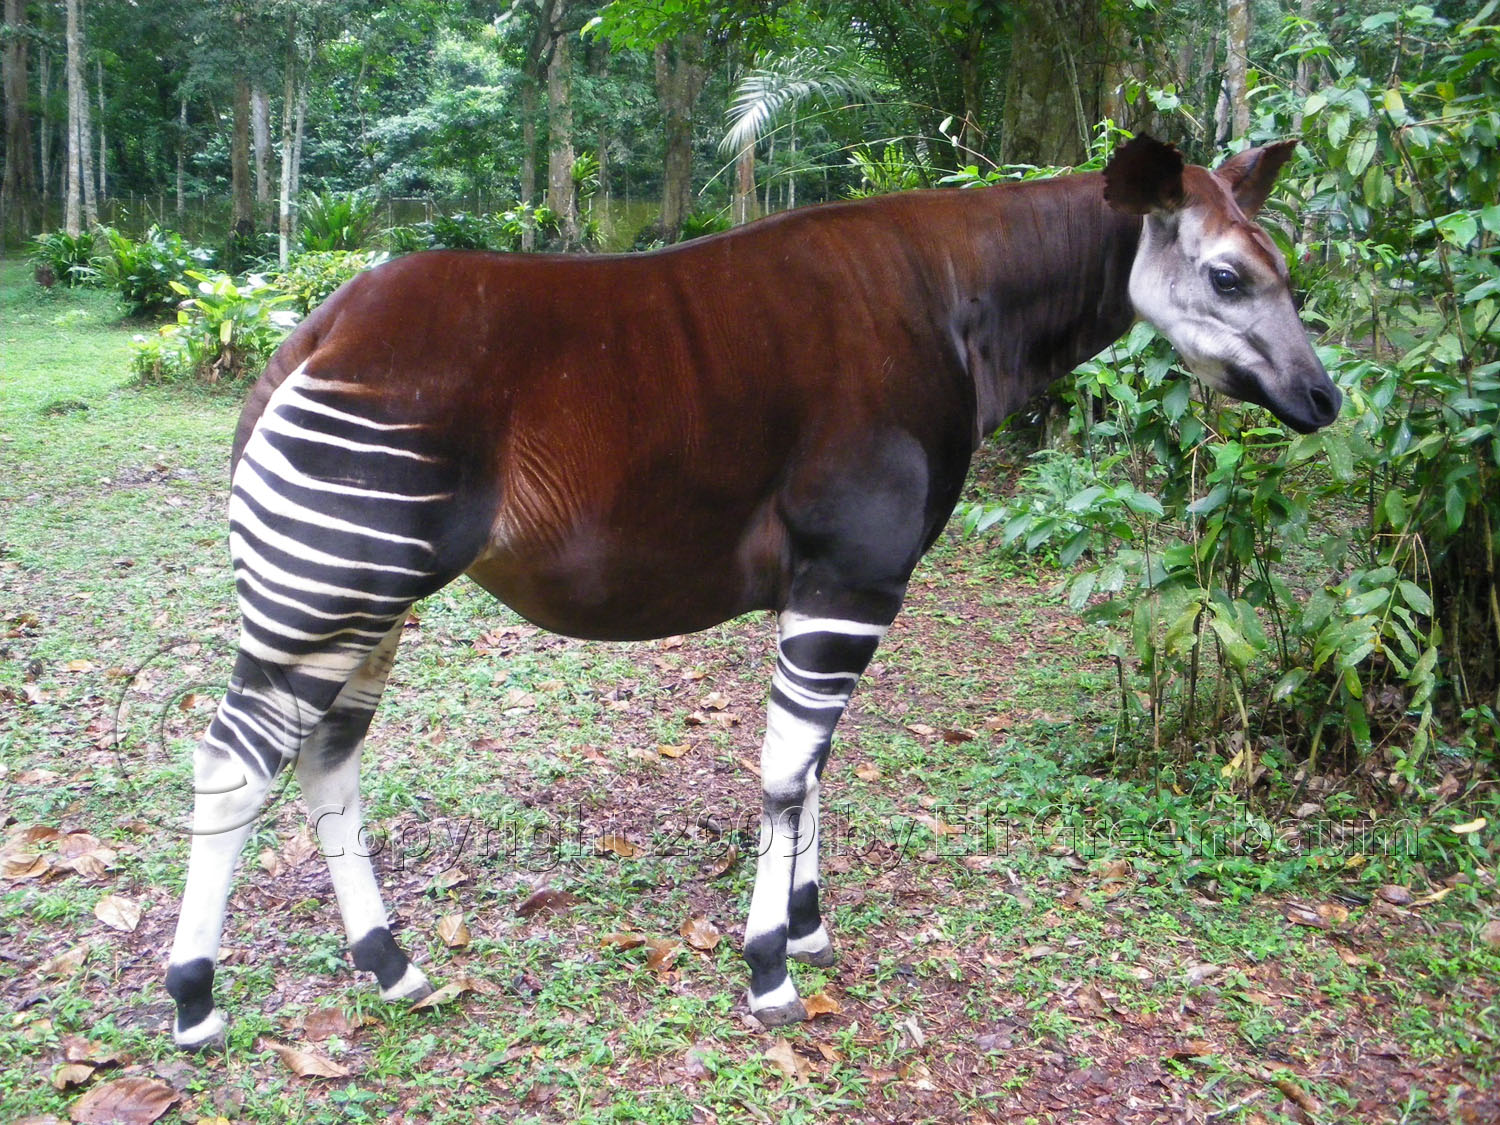 it's called an Okapi, dafuq?